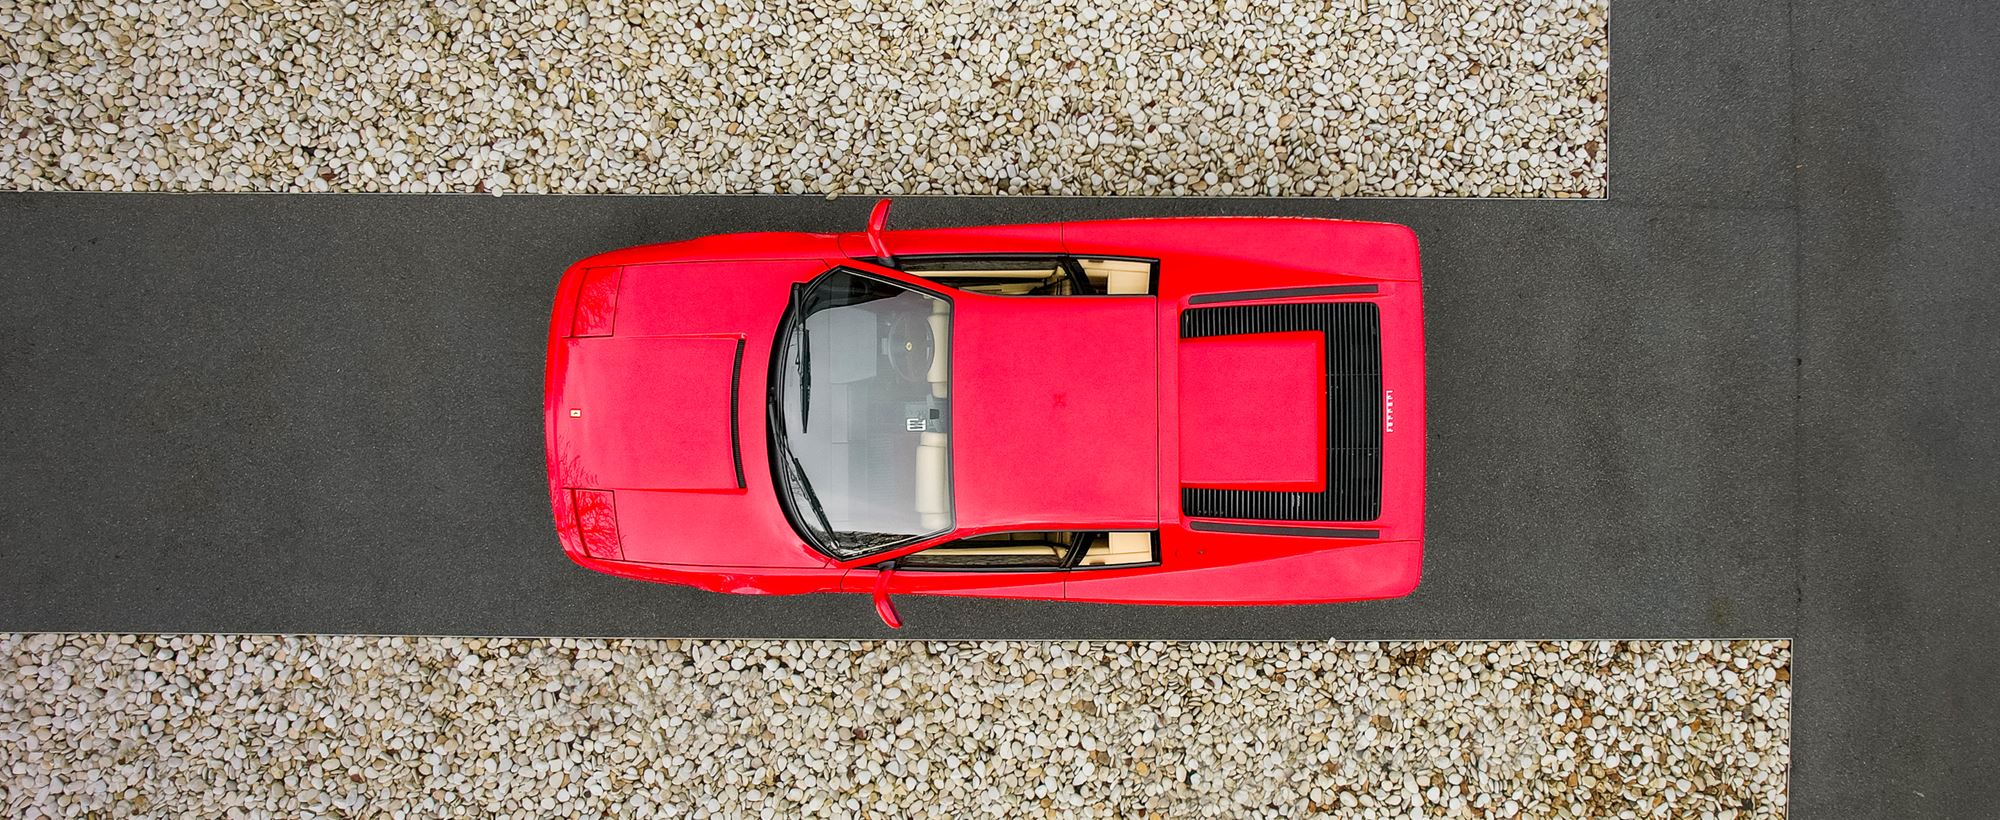 DHR Testarossa Rosso Corsa-79.jpg